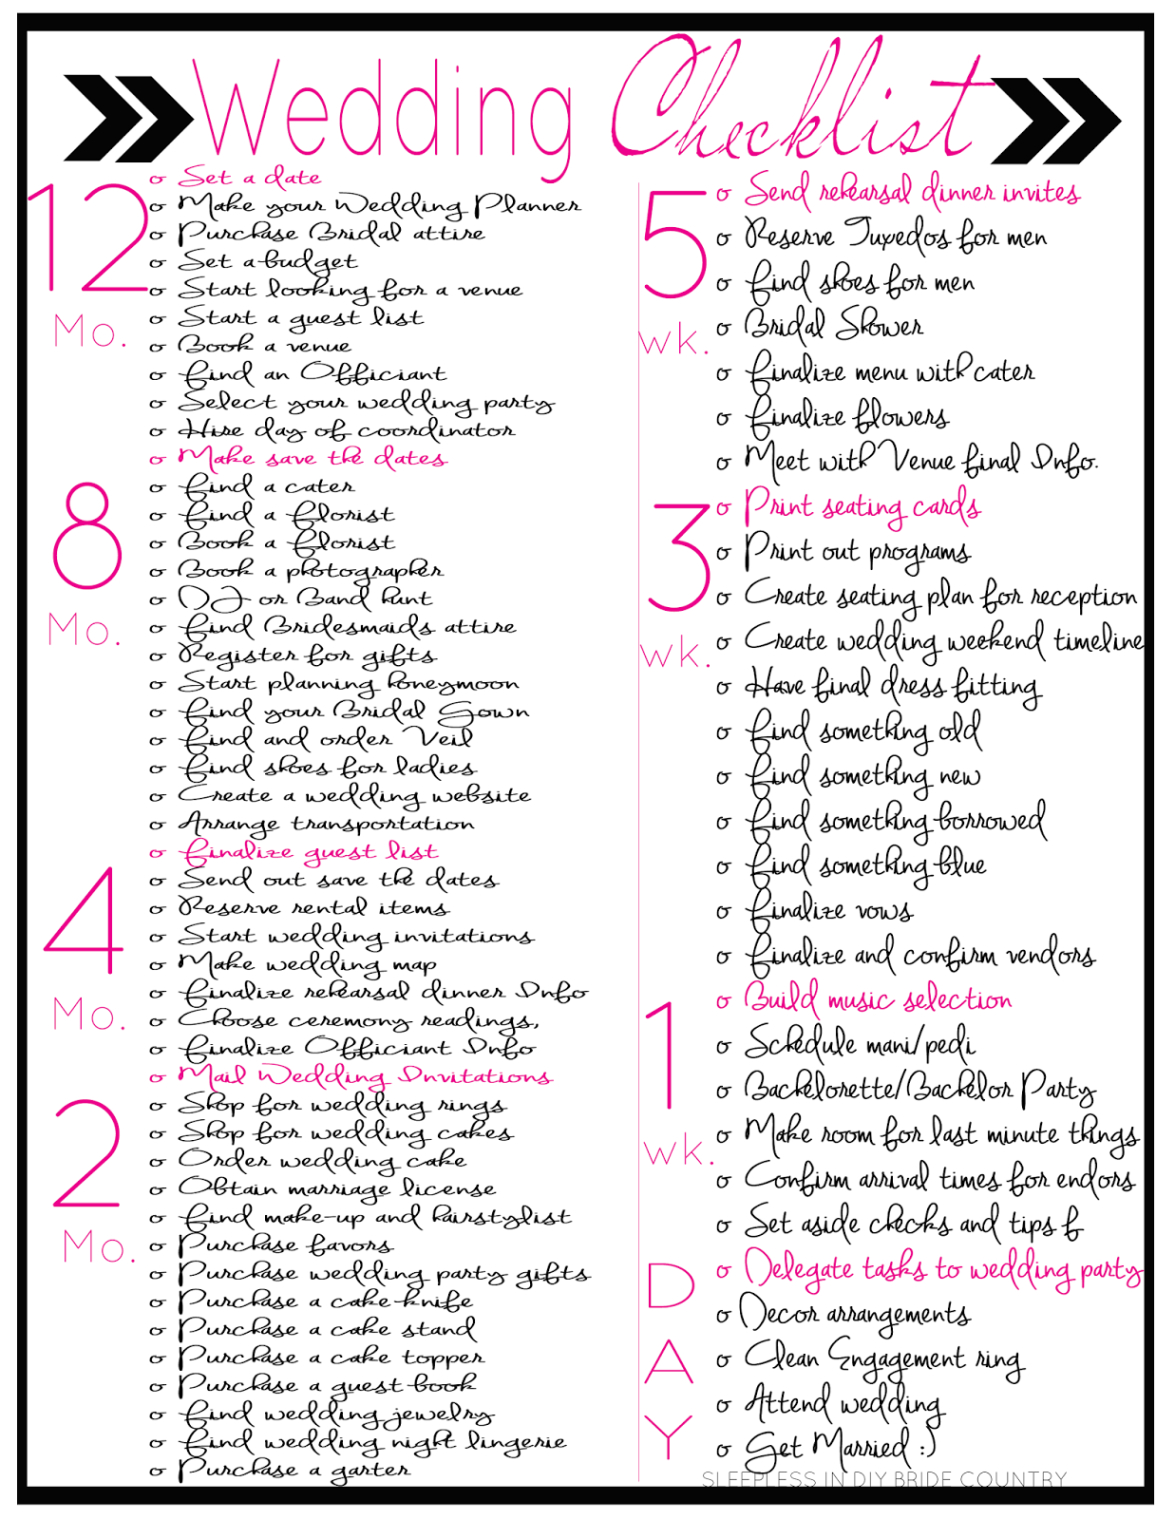 Printable Wedding Timeline Checklist   Lunawsome Pdf